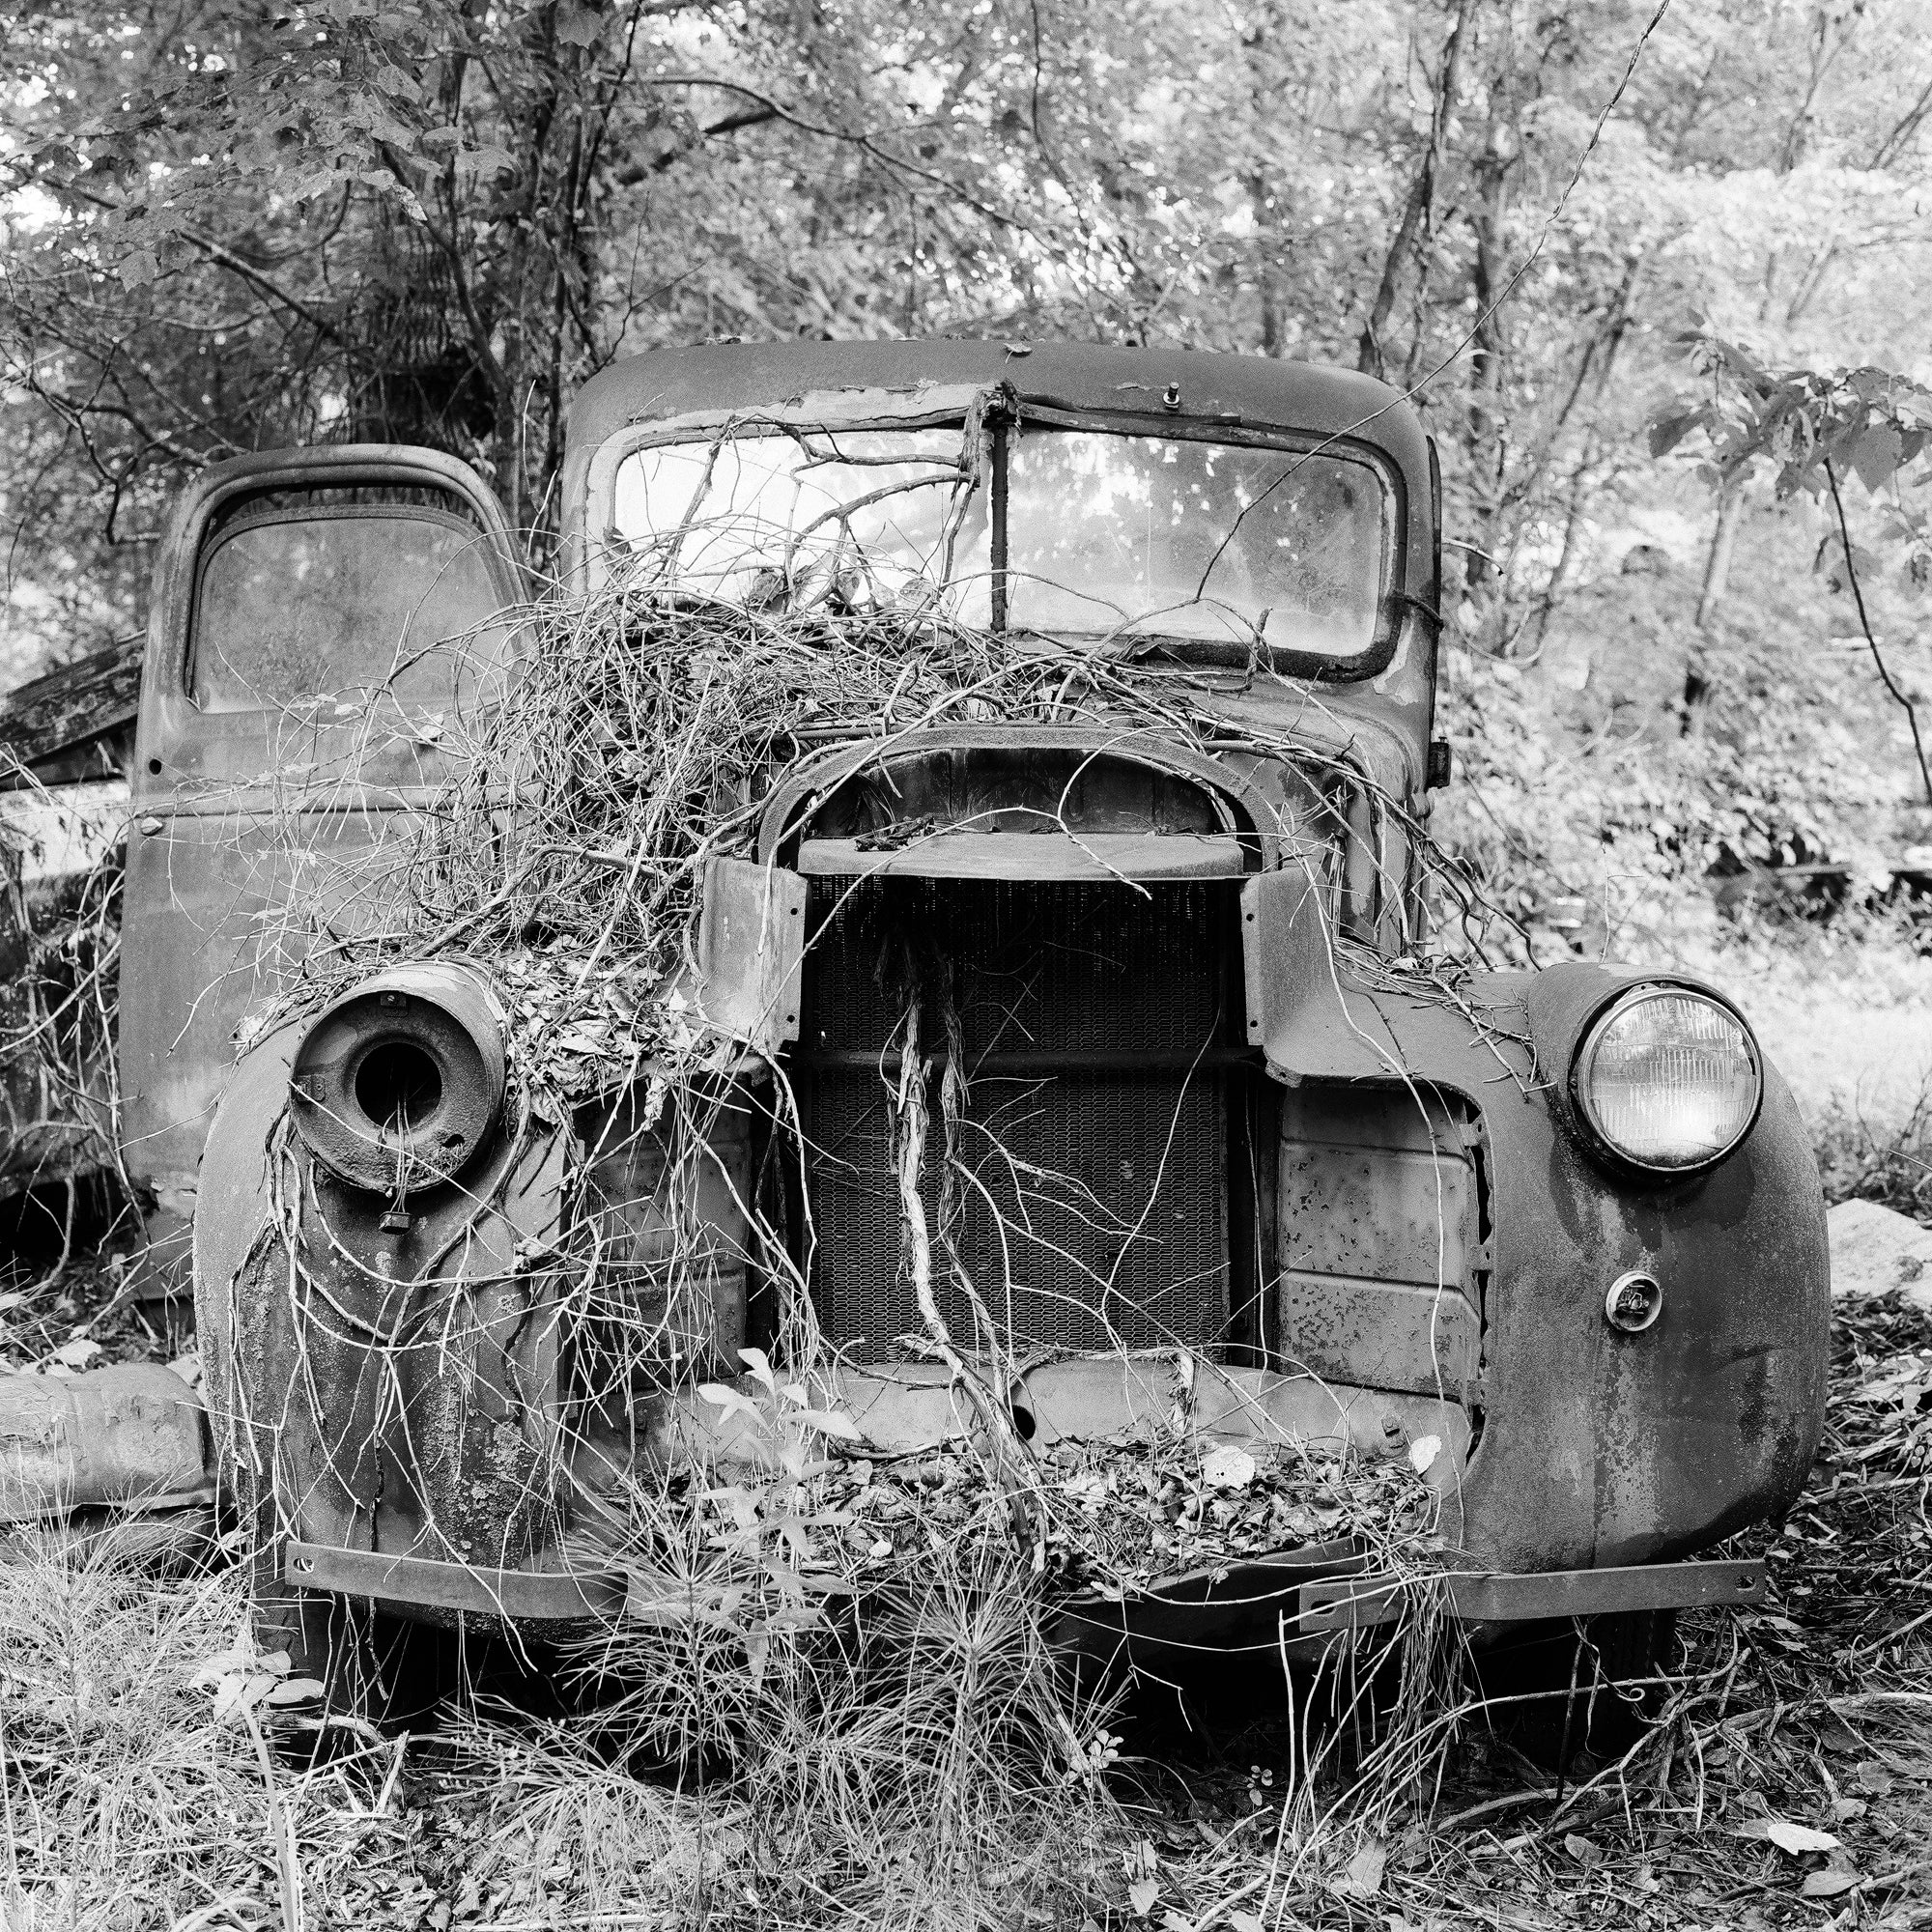 Rusty Junkyard Truck - Black and White Photograph by Keith Dotson. Buy a fine art print.